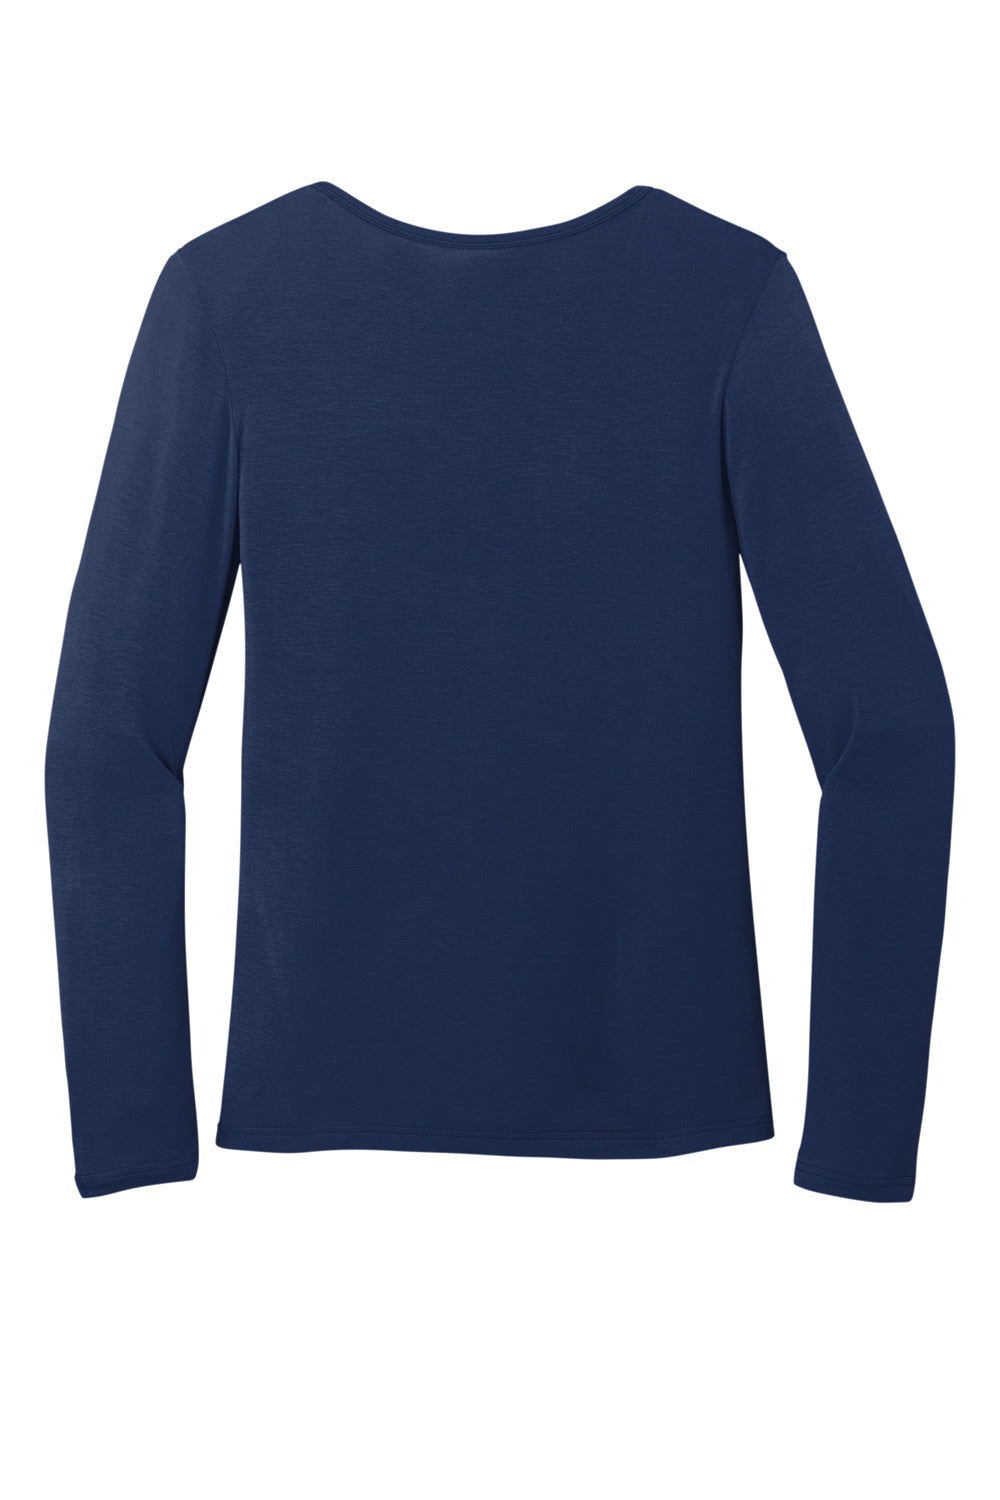 Wonderwink WW4029 Long Sleeve Crewneck Layer T-Shirt Navy Blue Flat Back